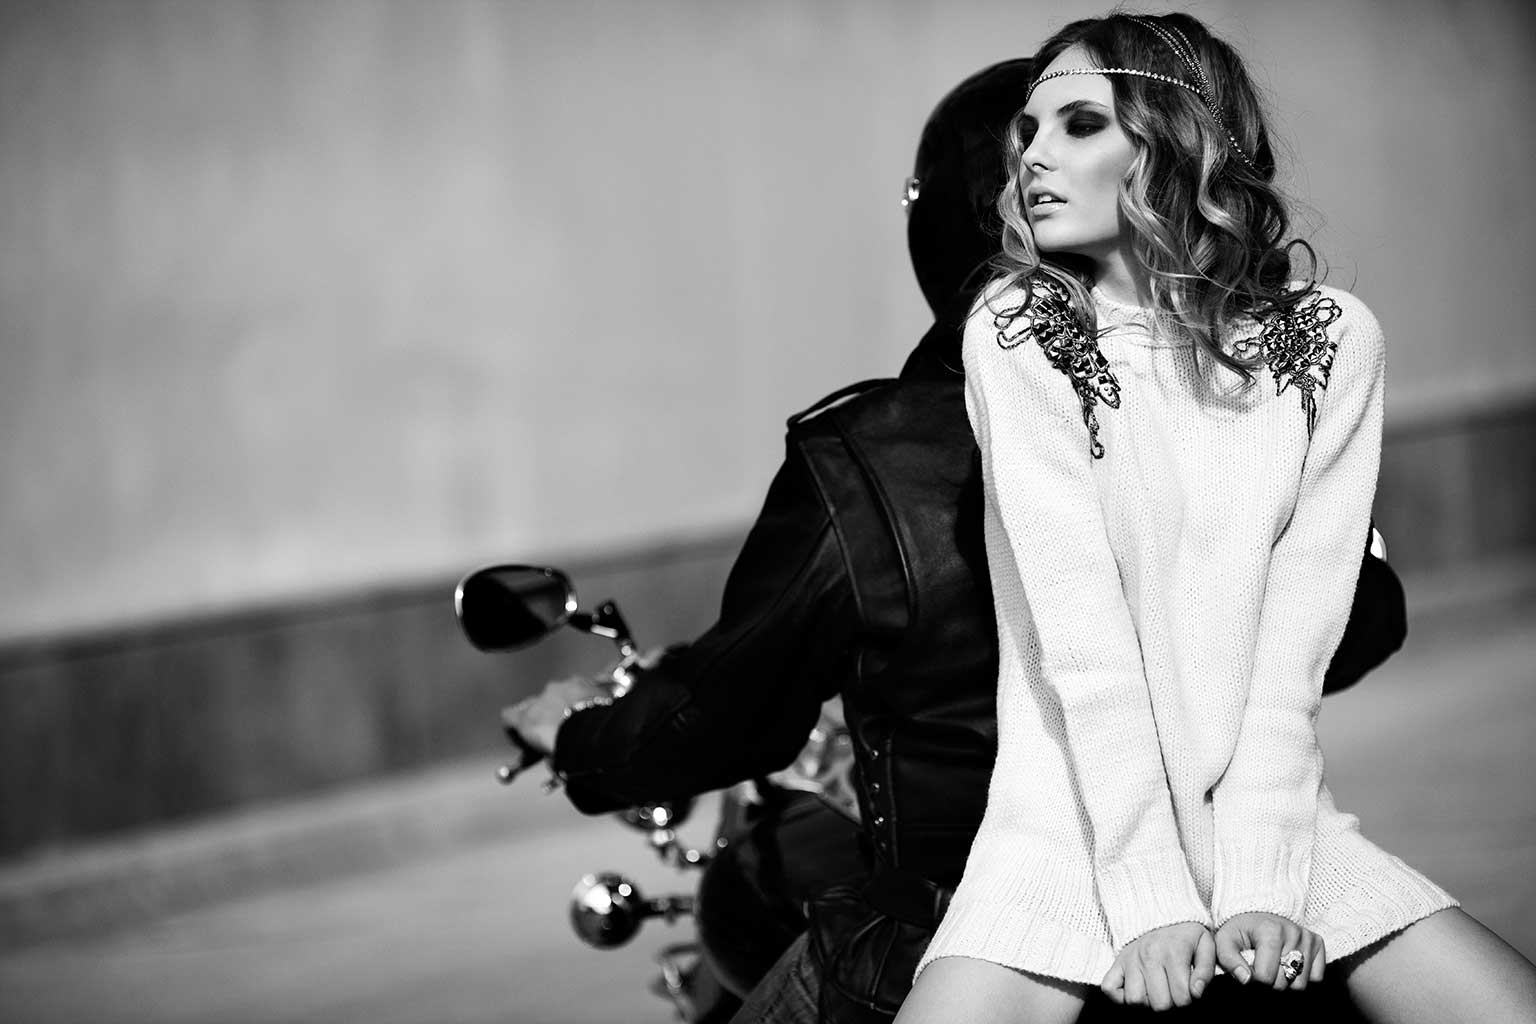 Woman Facing Backwards on a Motorcycle